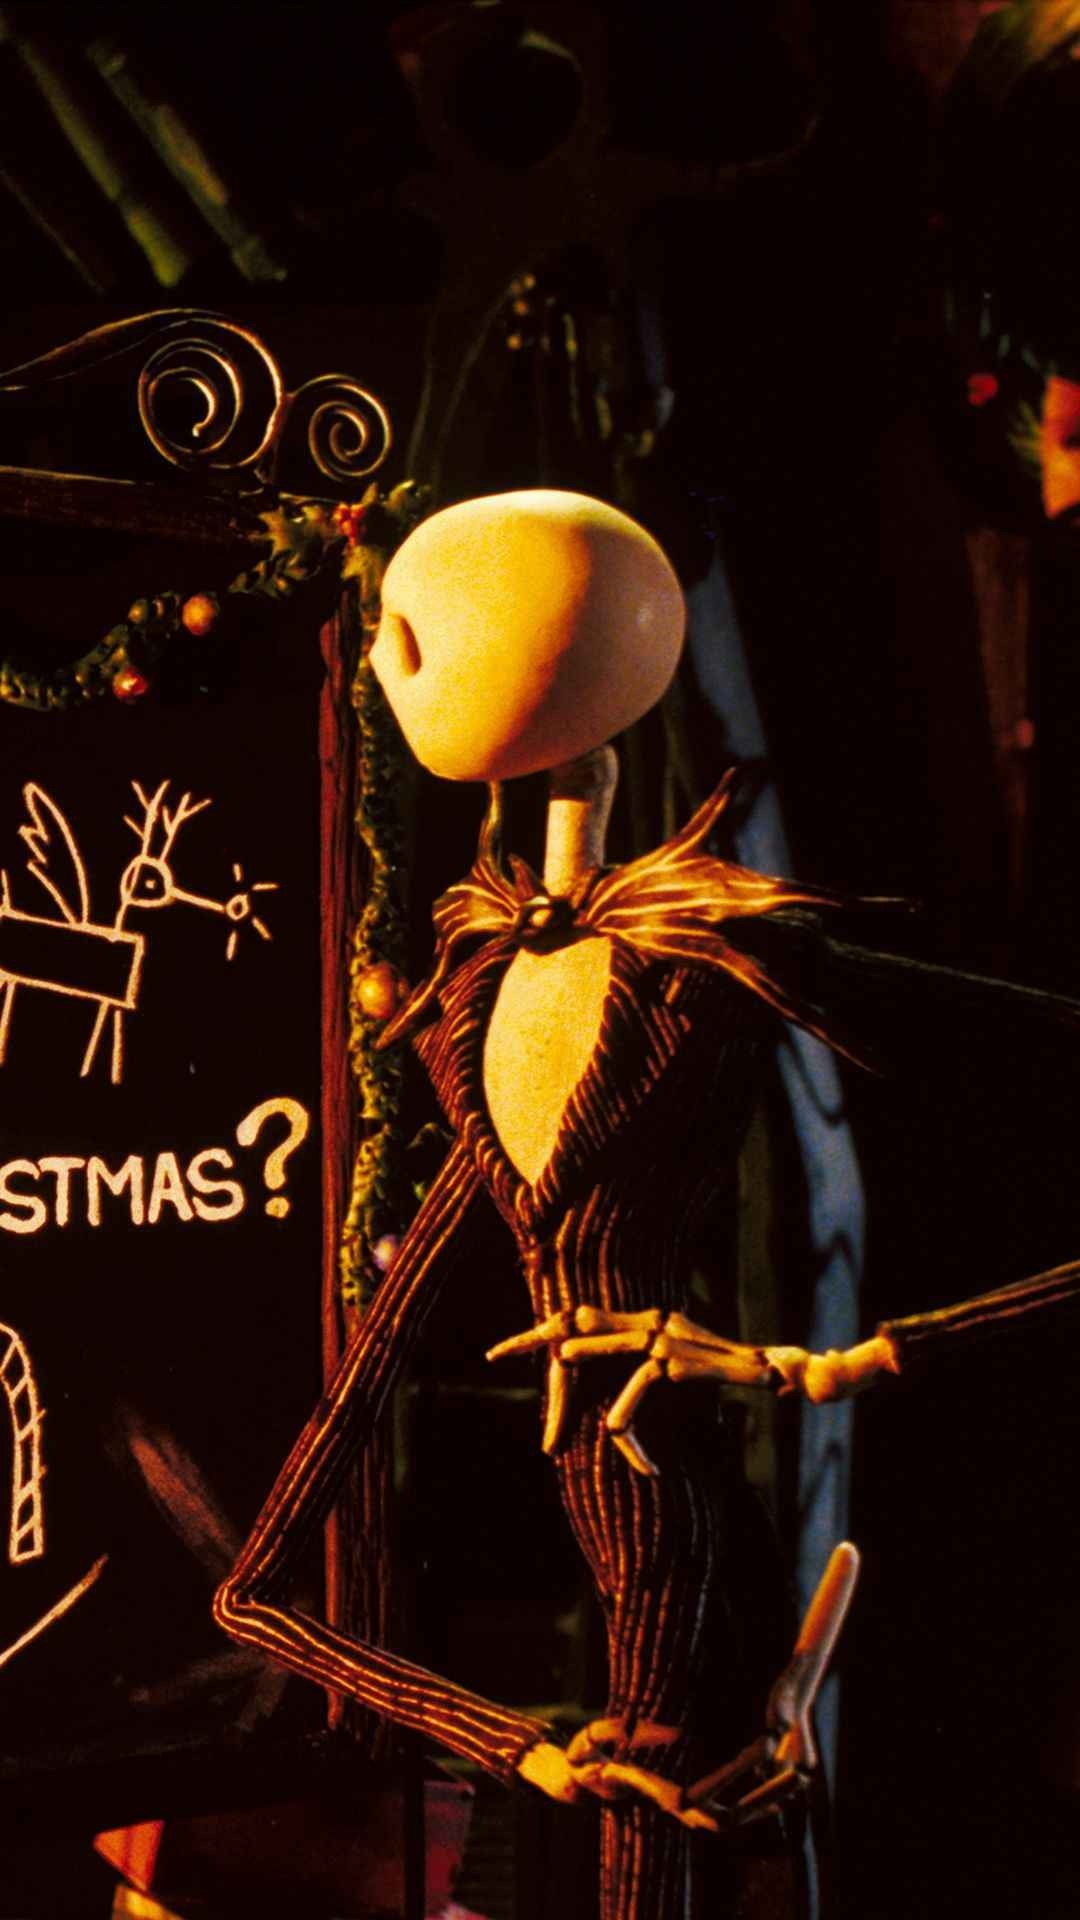 1080x1920 Formula Chalkboard 2014 Halloween Jack Skellington iPhone 6 Wallpaper -  Nightmare Before Christmas Movie #2014